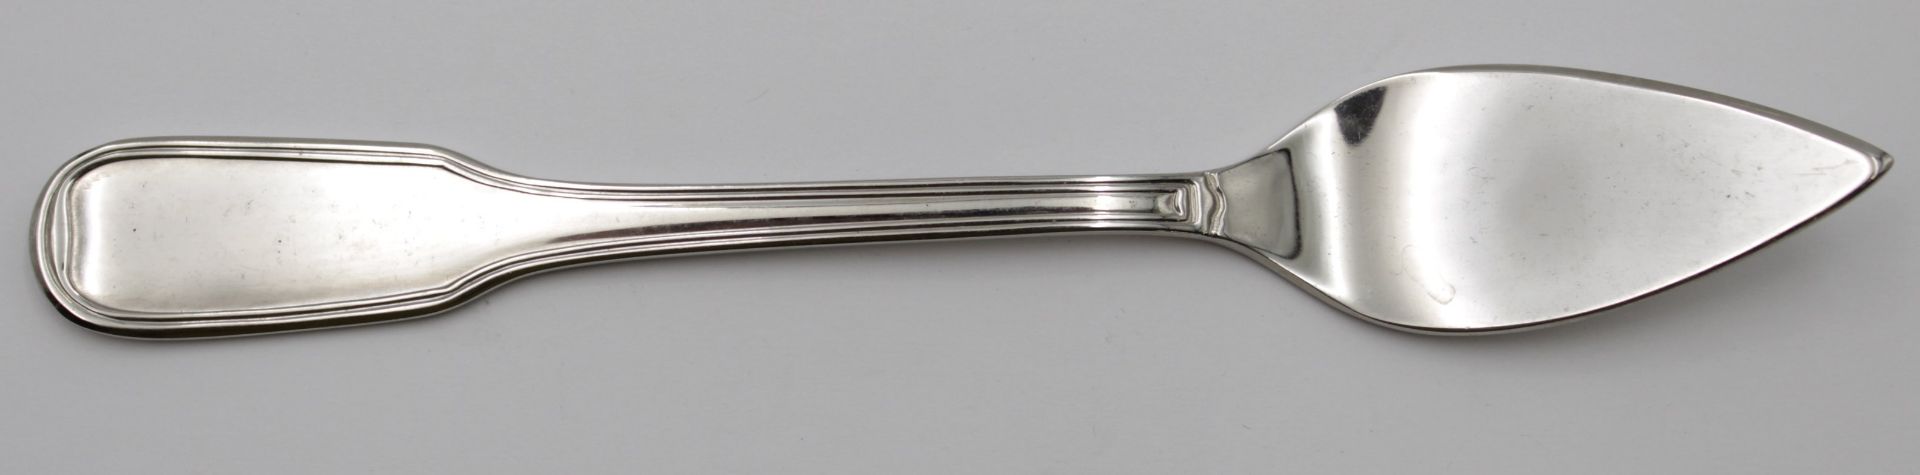 6x Austern-Messer, Edelstahl, ca. L-17,5cm. - Image 2 of 4